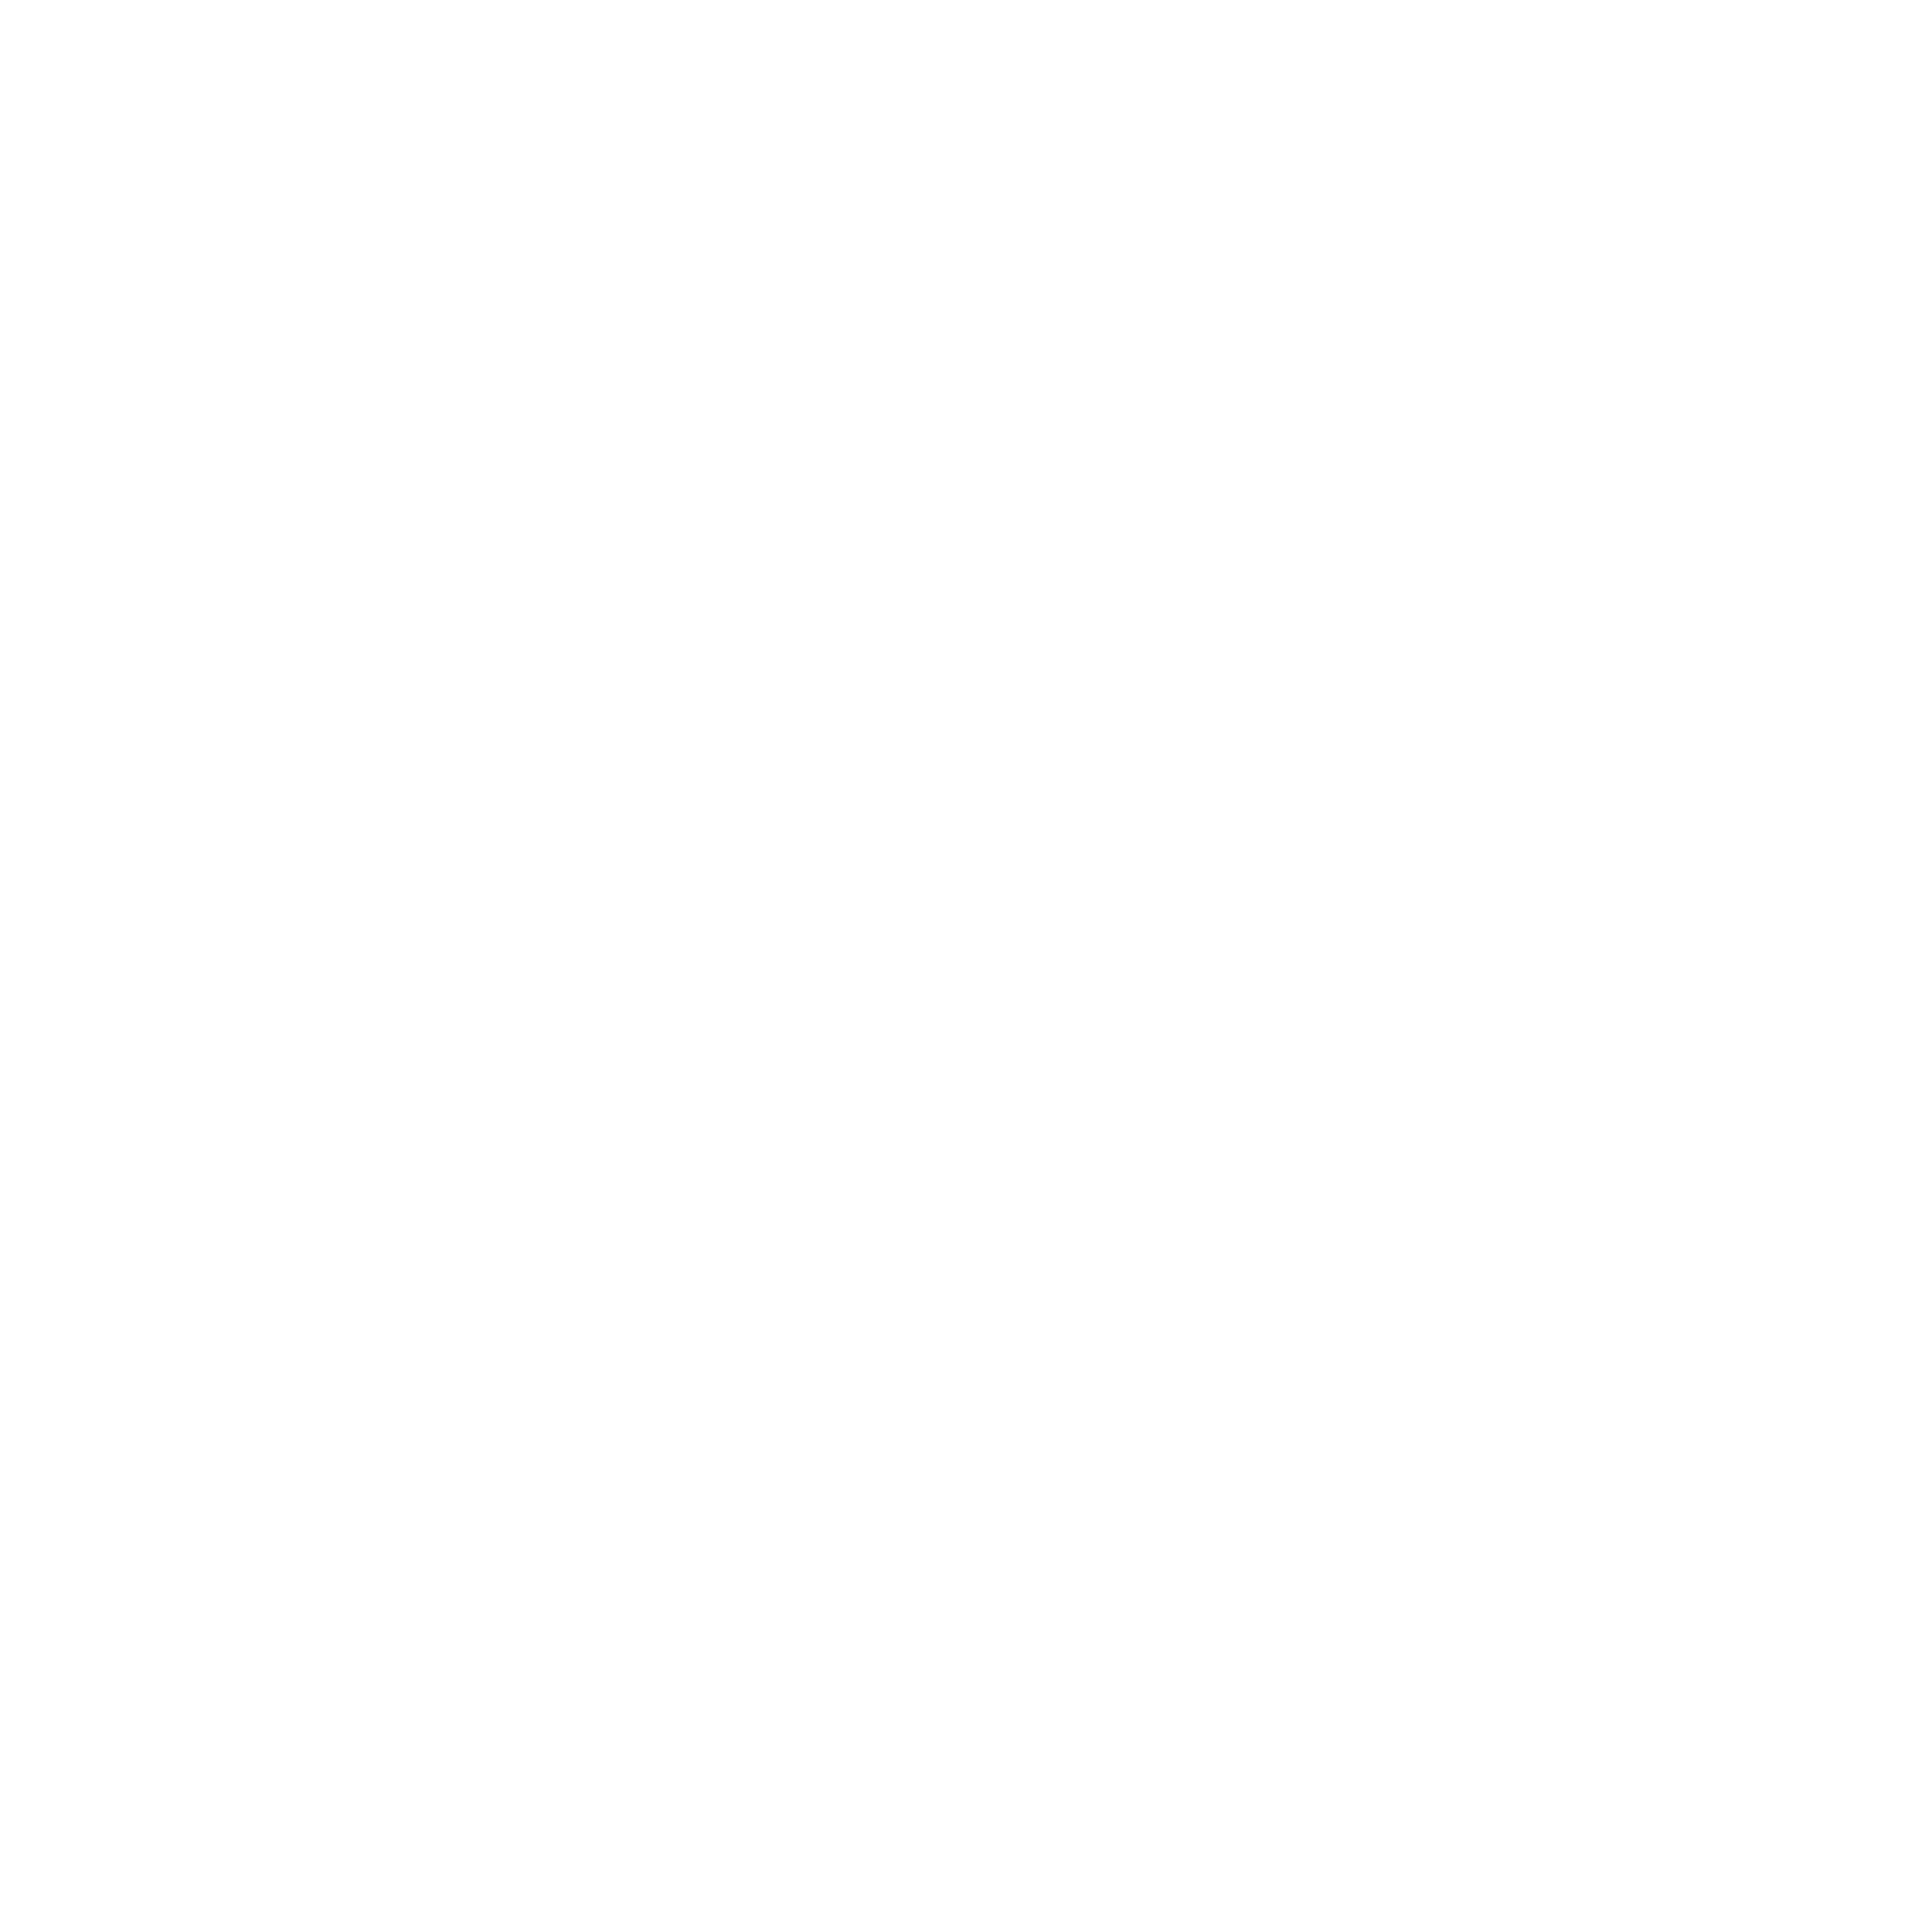 Angebote für Aquaristik